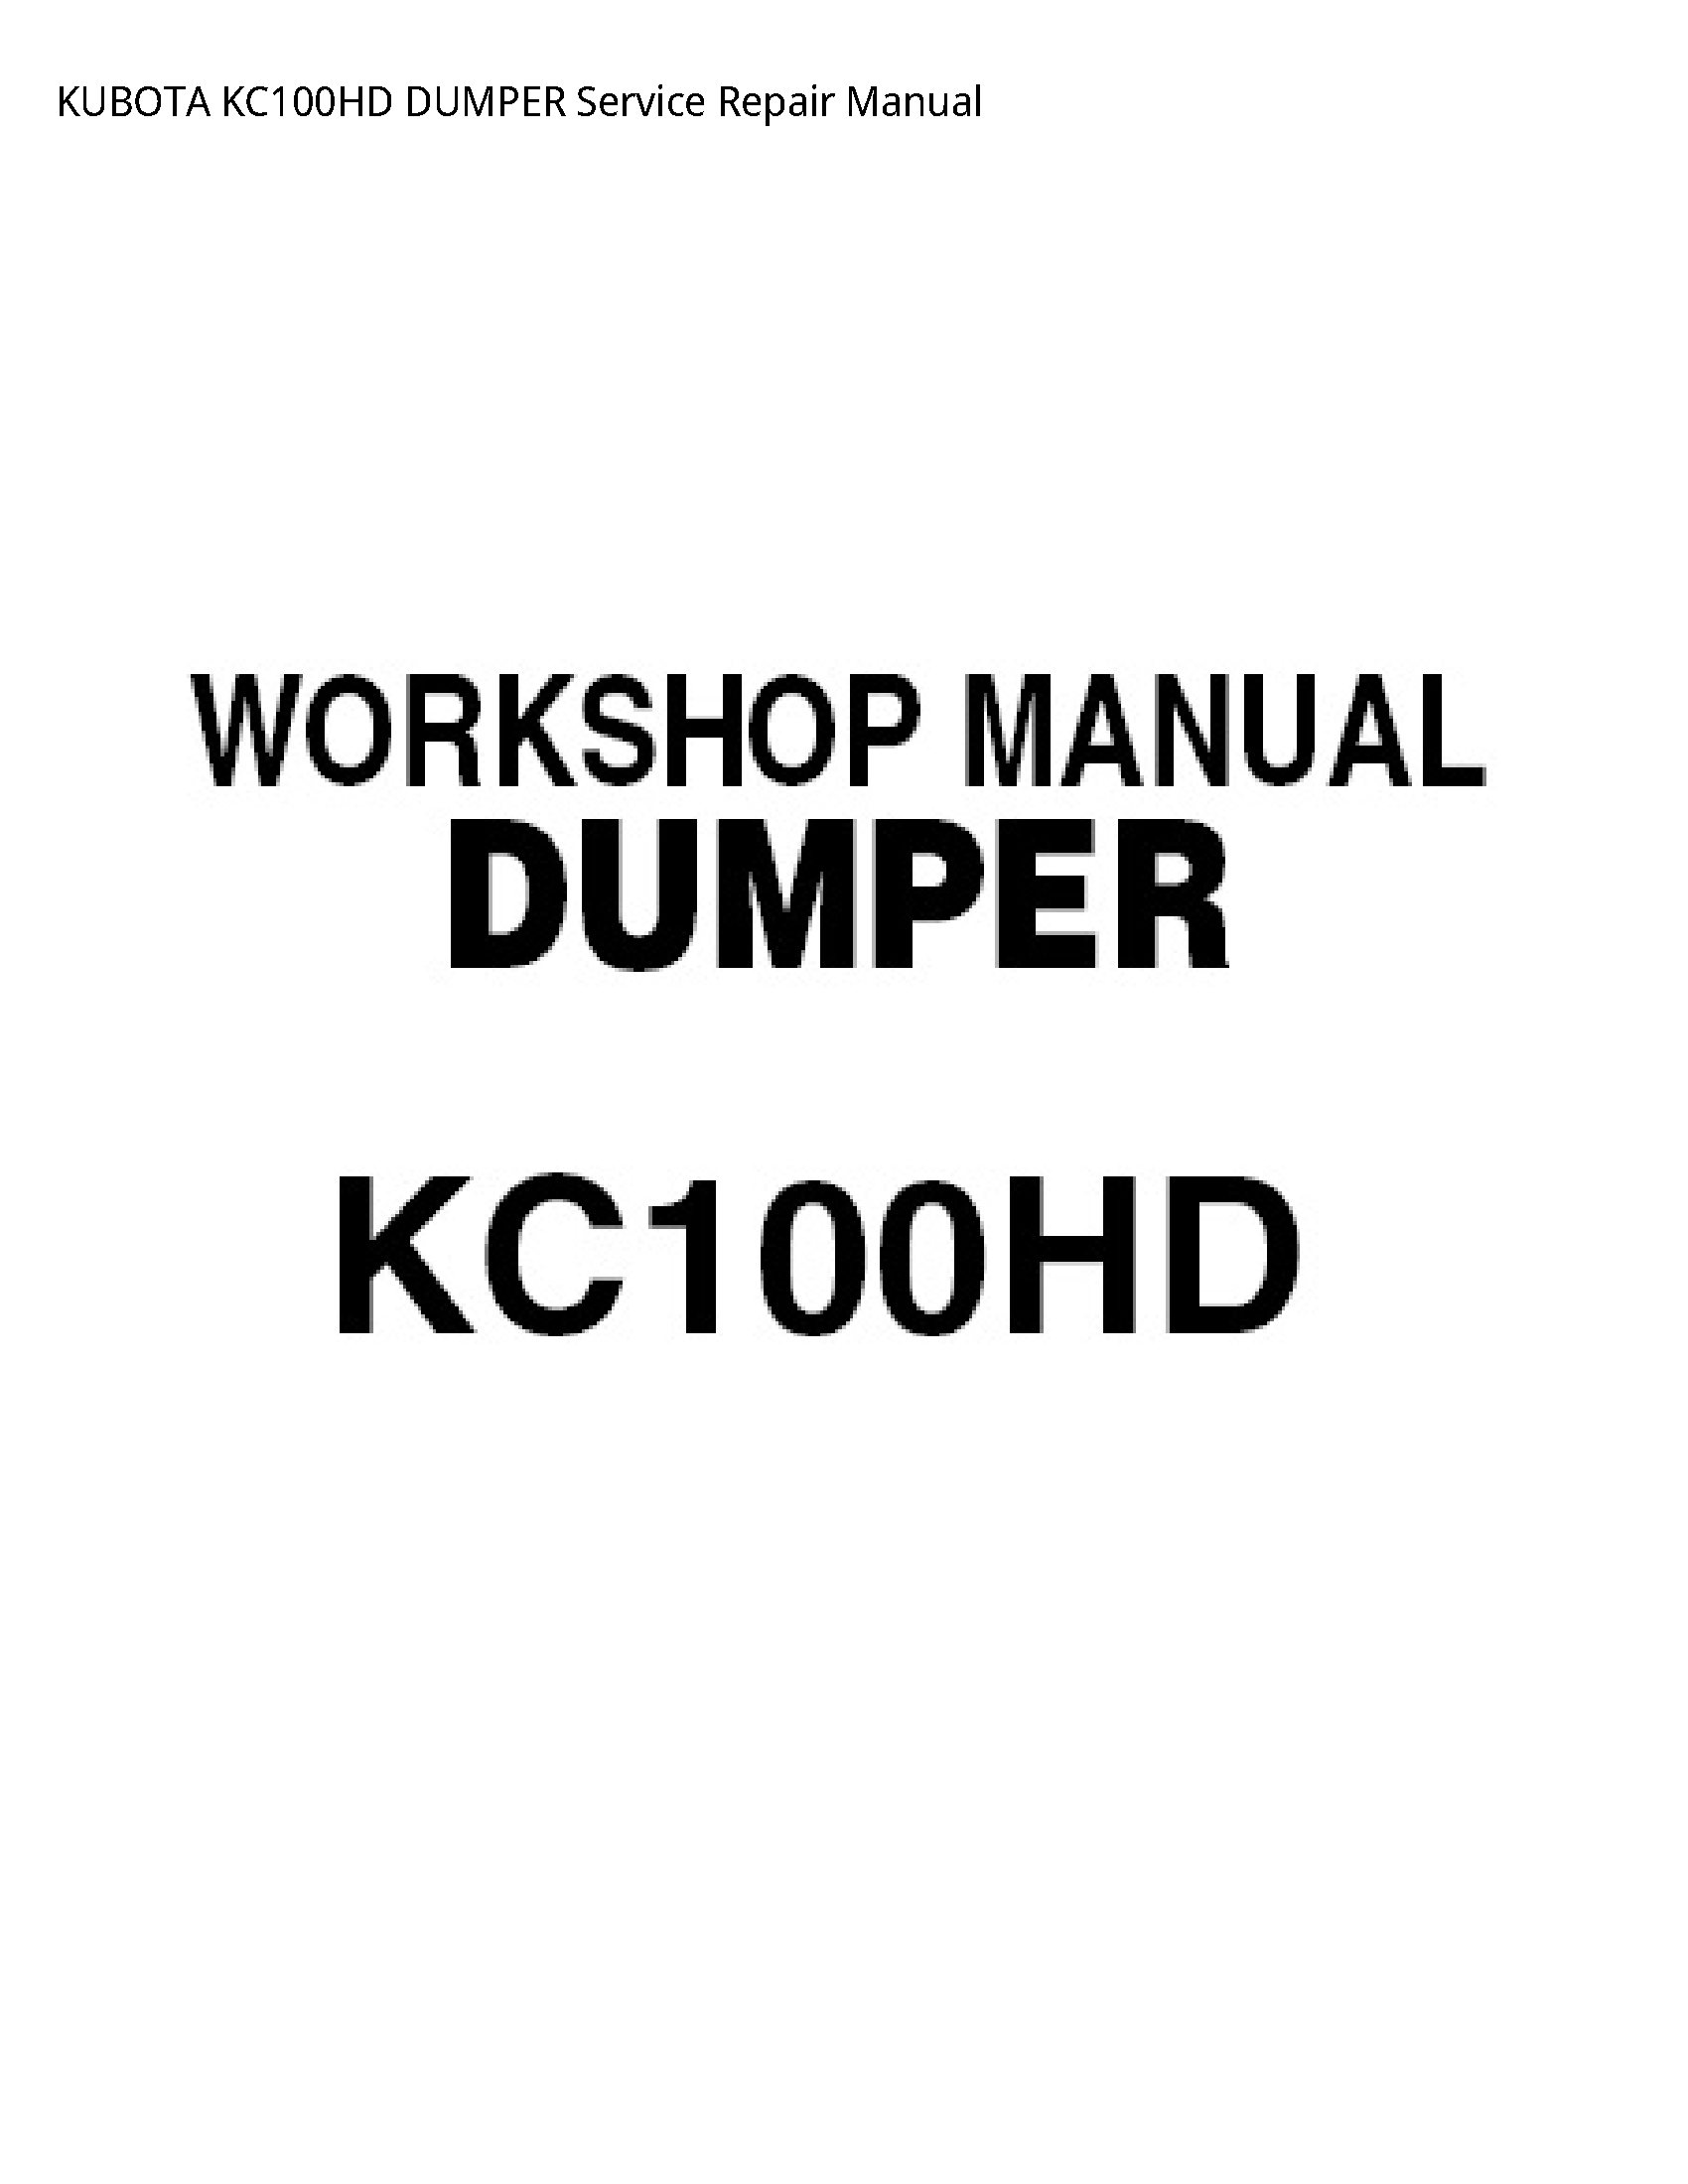 Kubota KC100HD DUMPER manual